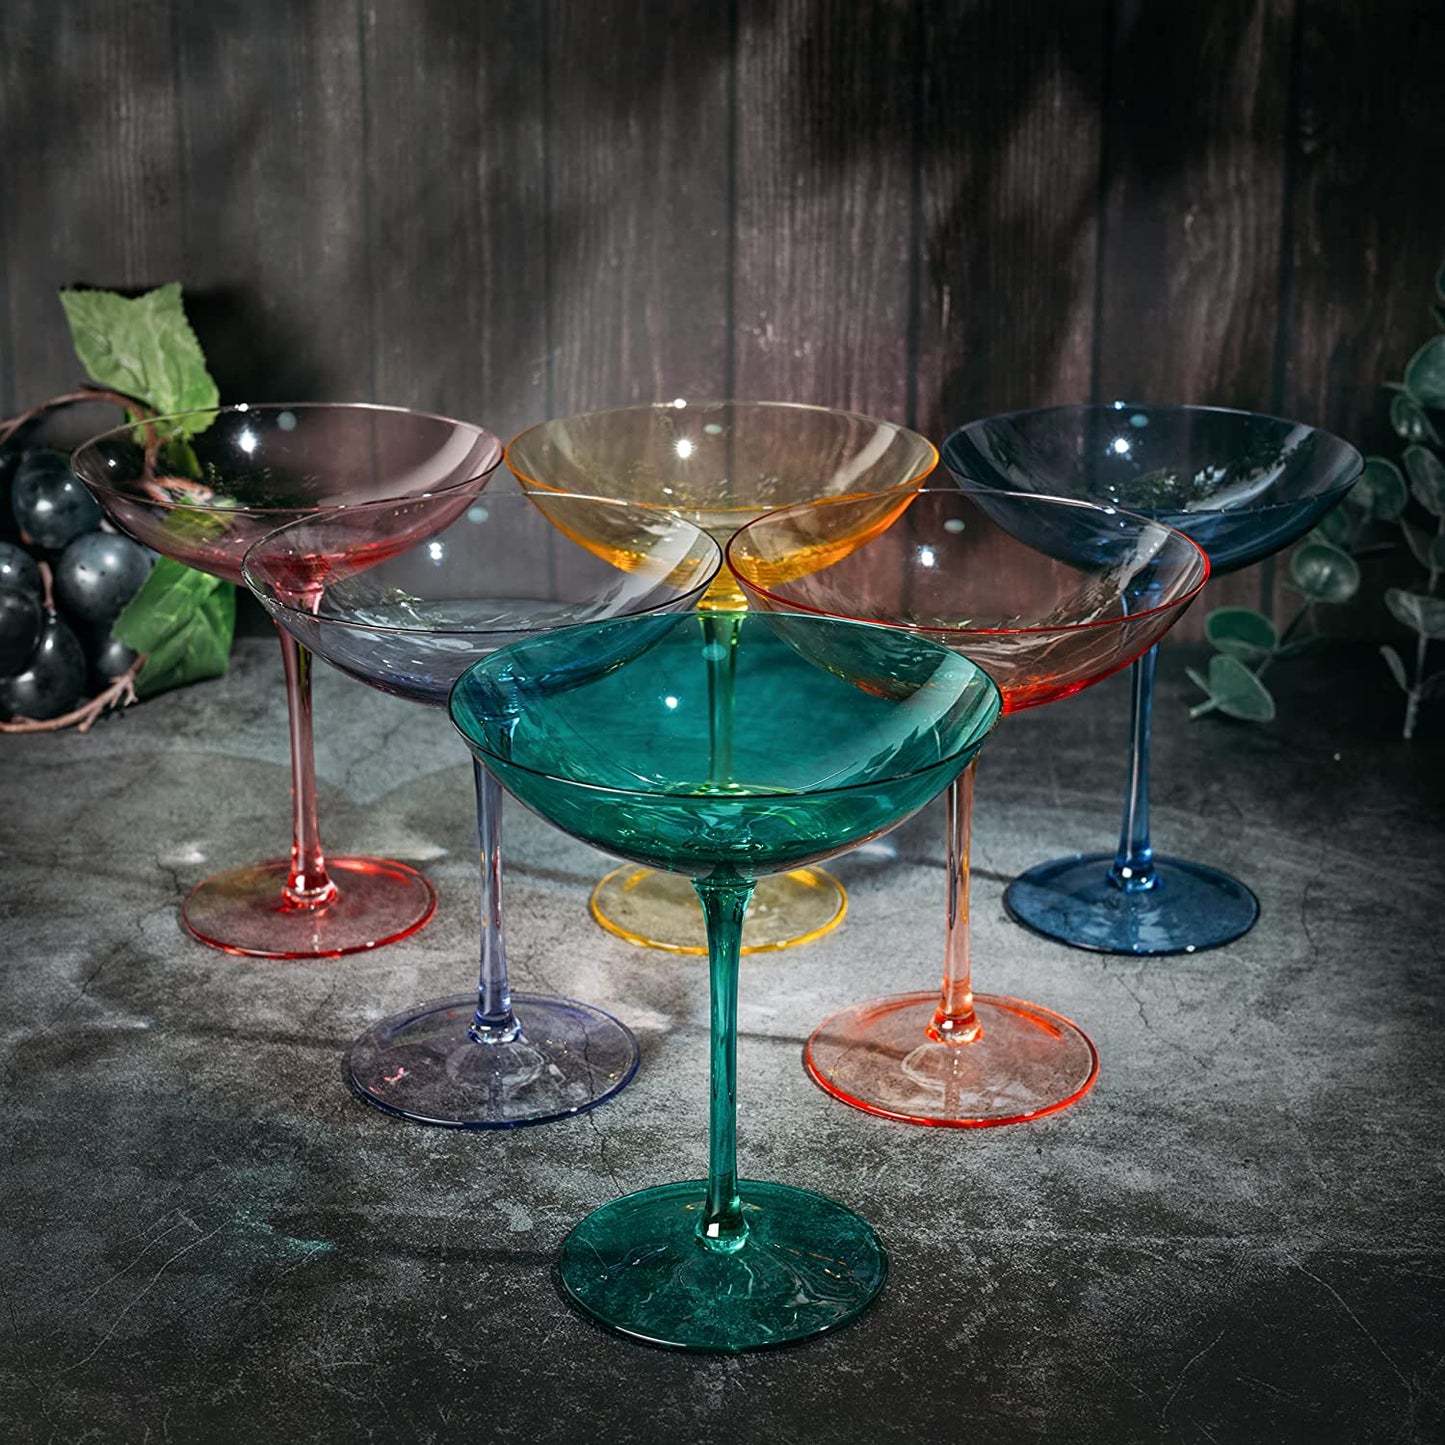 The Wine Savant - Colorful Champagne Coupes - 12oz - (6, Multicolored)